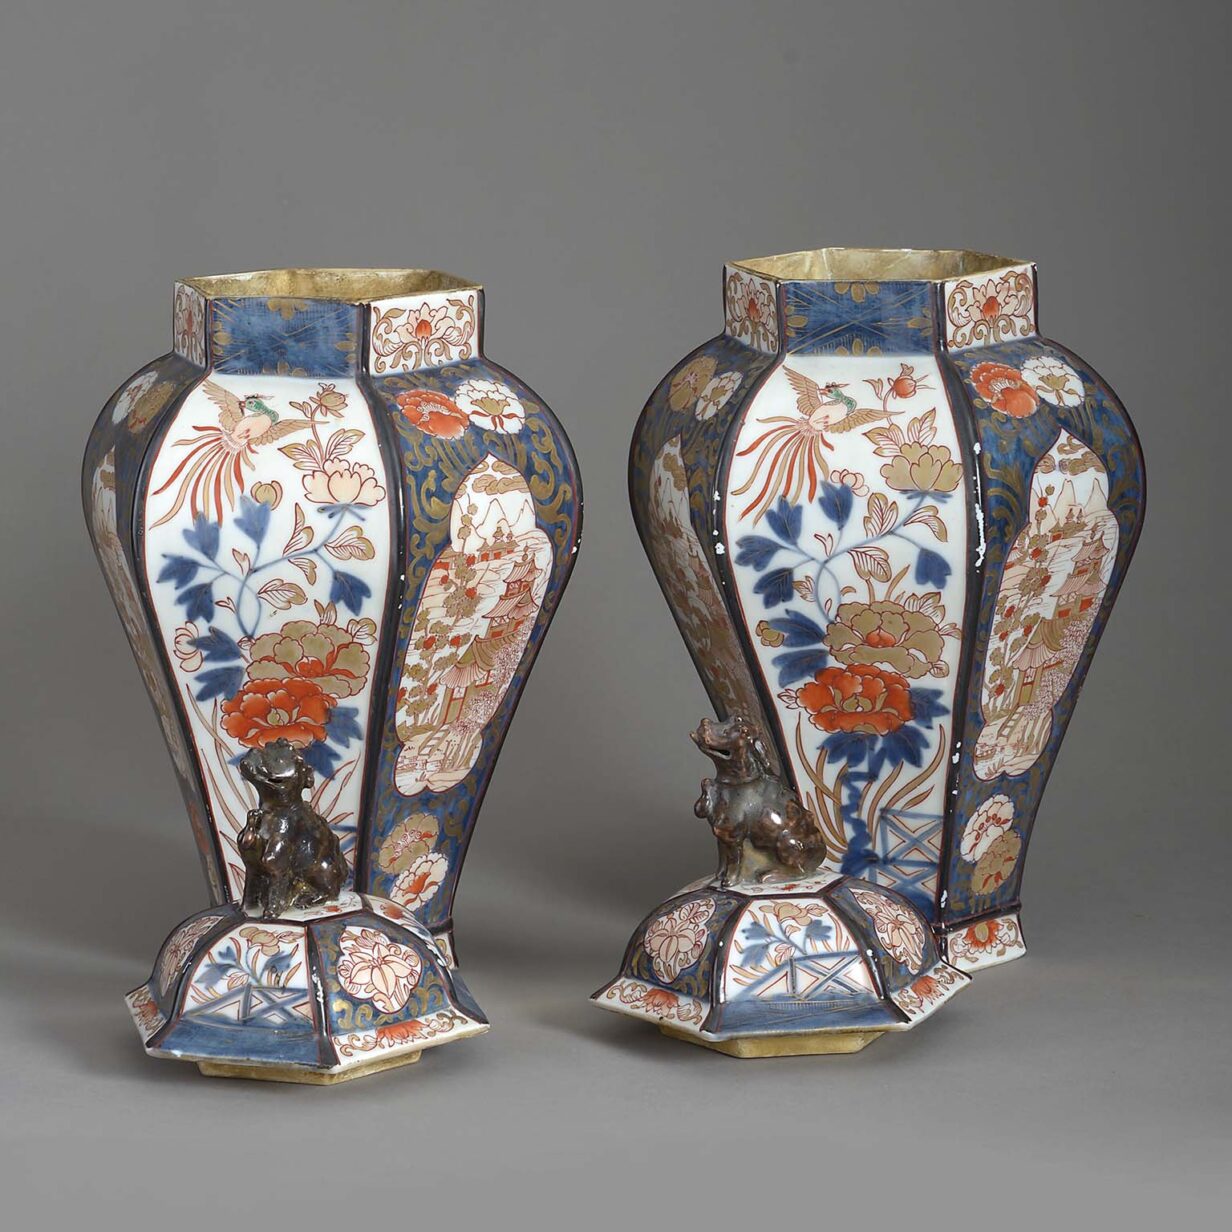 Pair of samson imari vases and covers